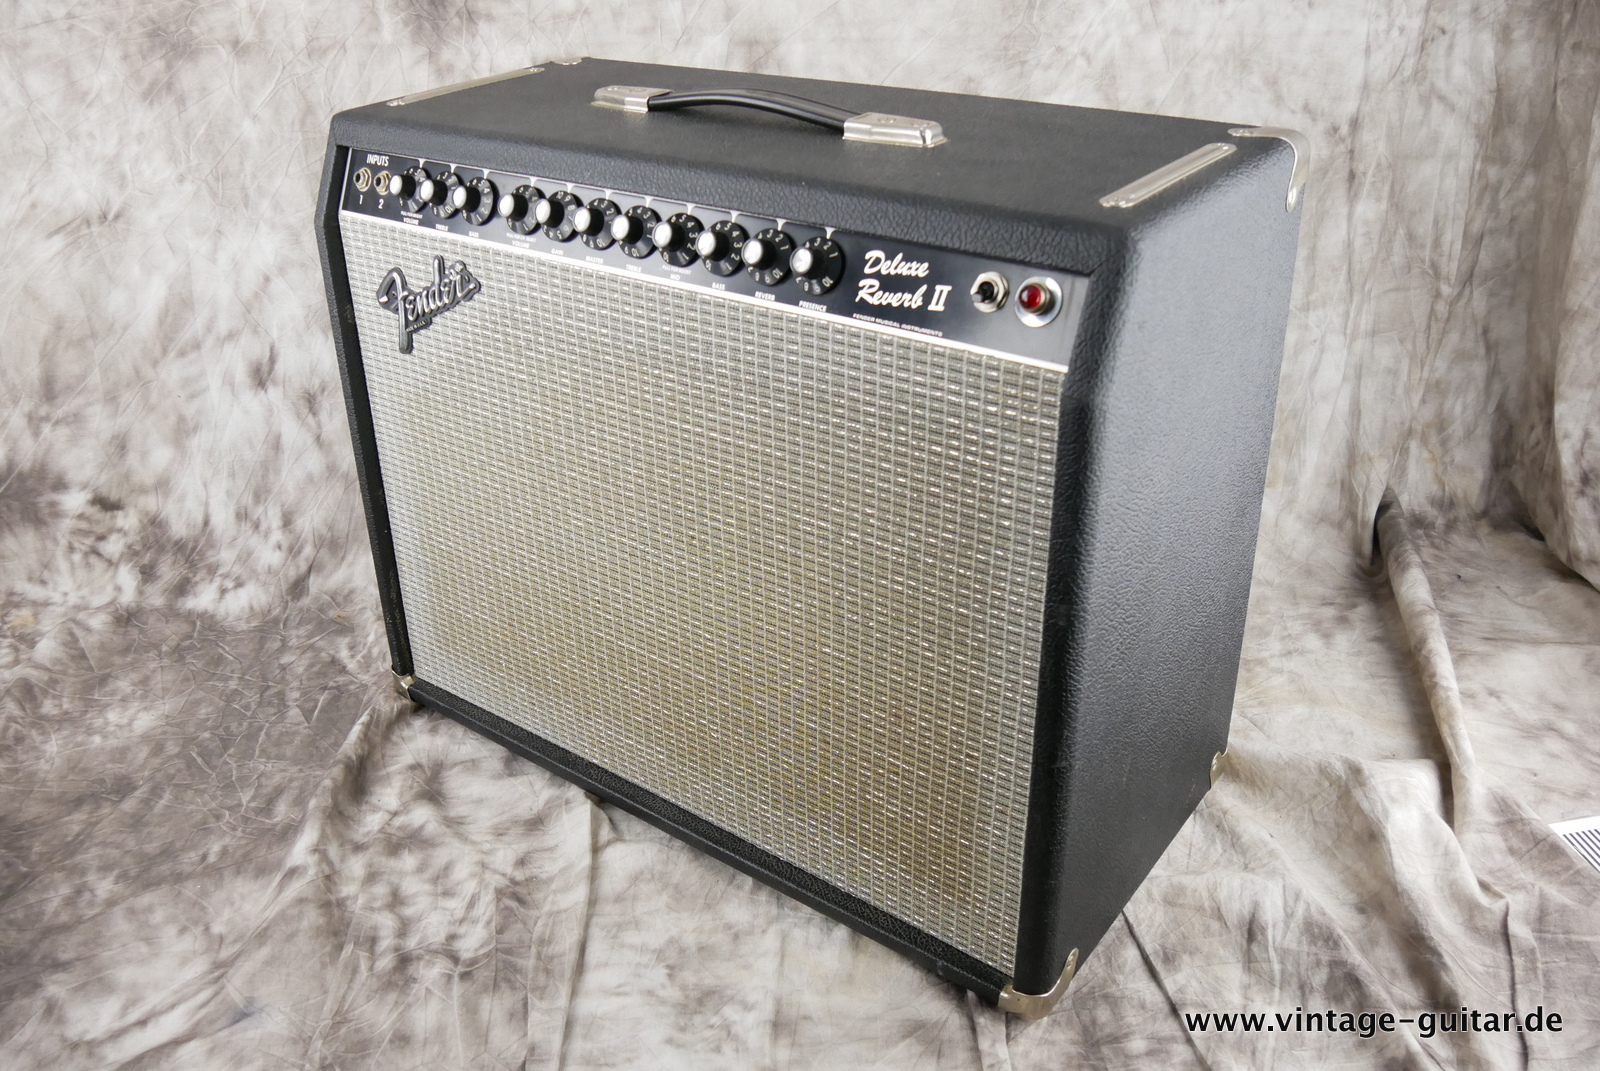 Fender-Deluxe-Reverb-II-1983-black-tolex-005.JPG